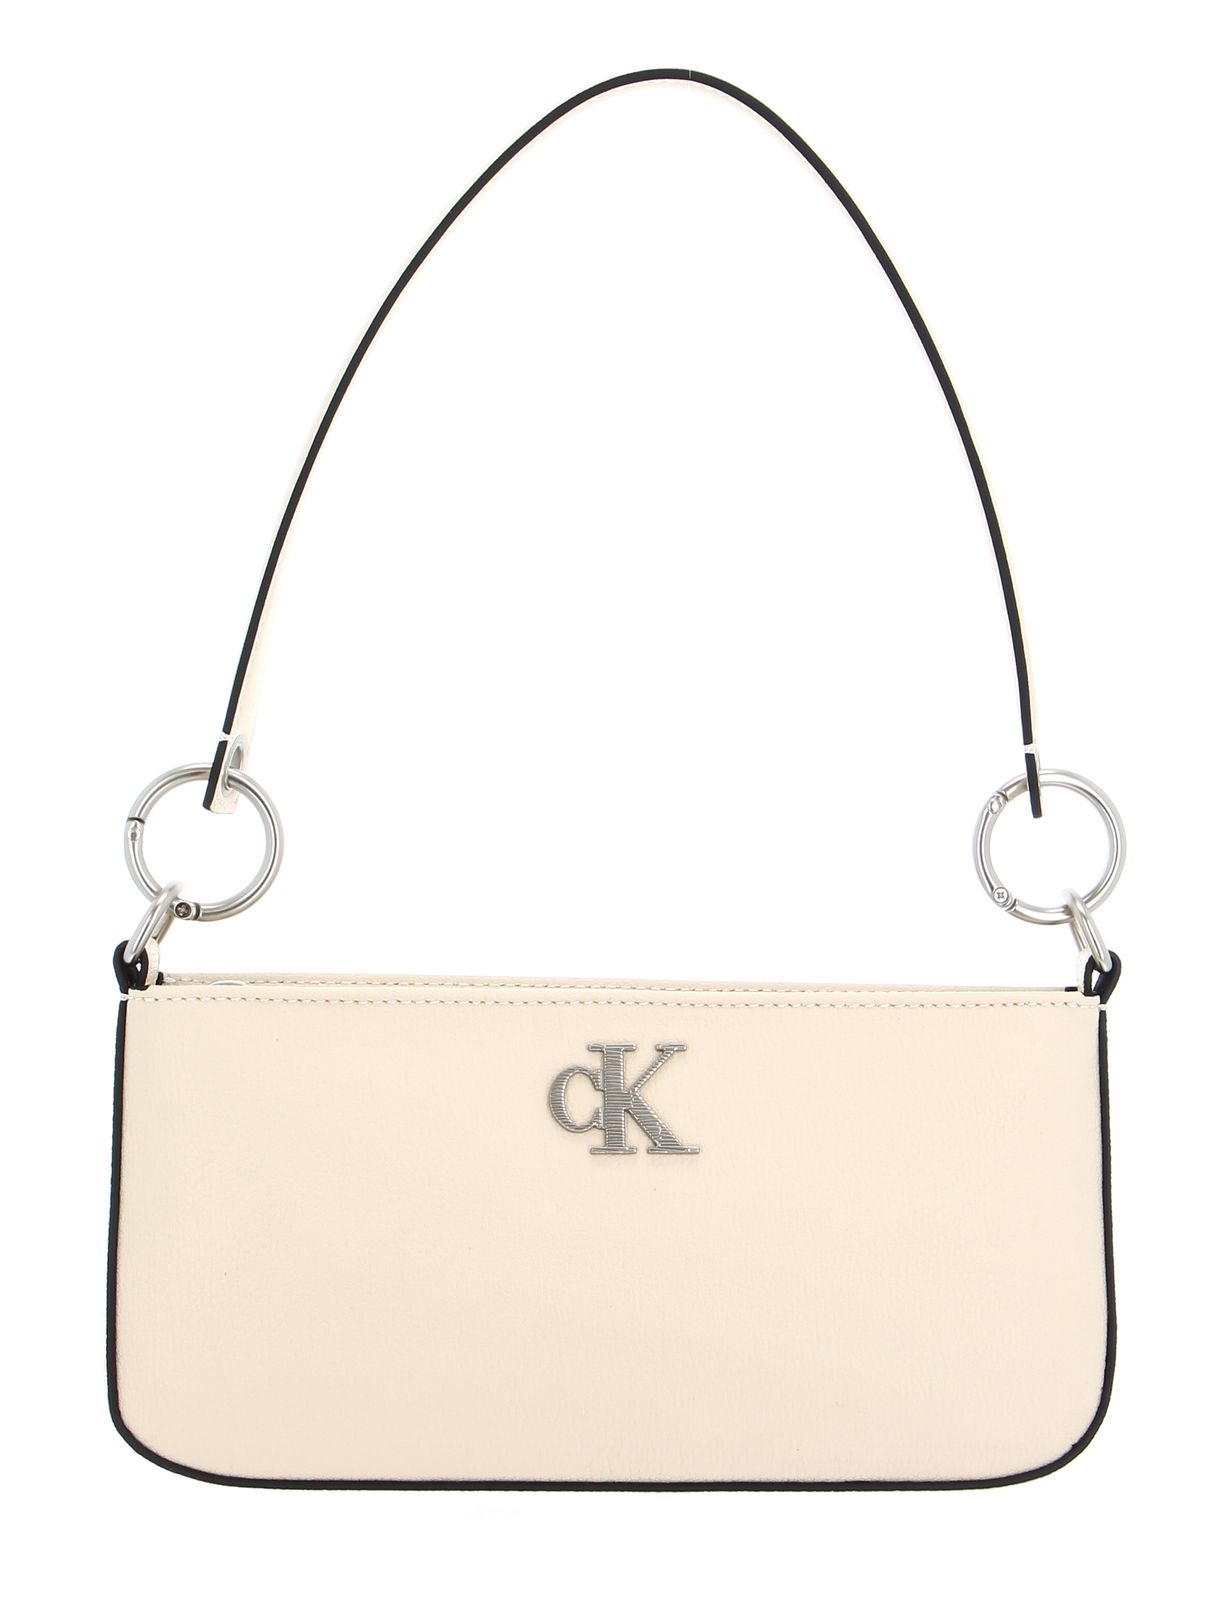 Calvin Klein Zoe Crossbody, Almond/Taupe/Vanilla/Khaki/Cherub White Logo:  Handbags: Amazon.com